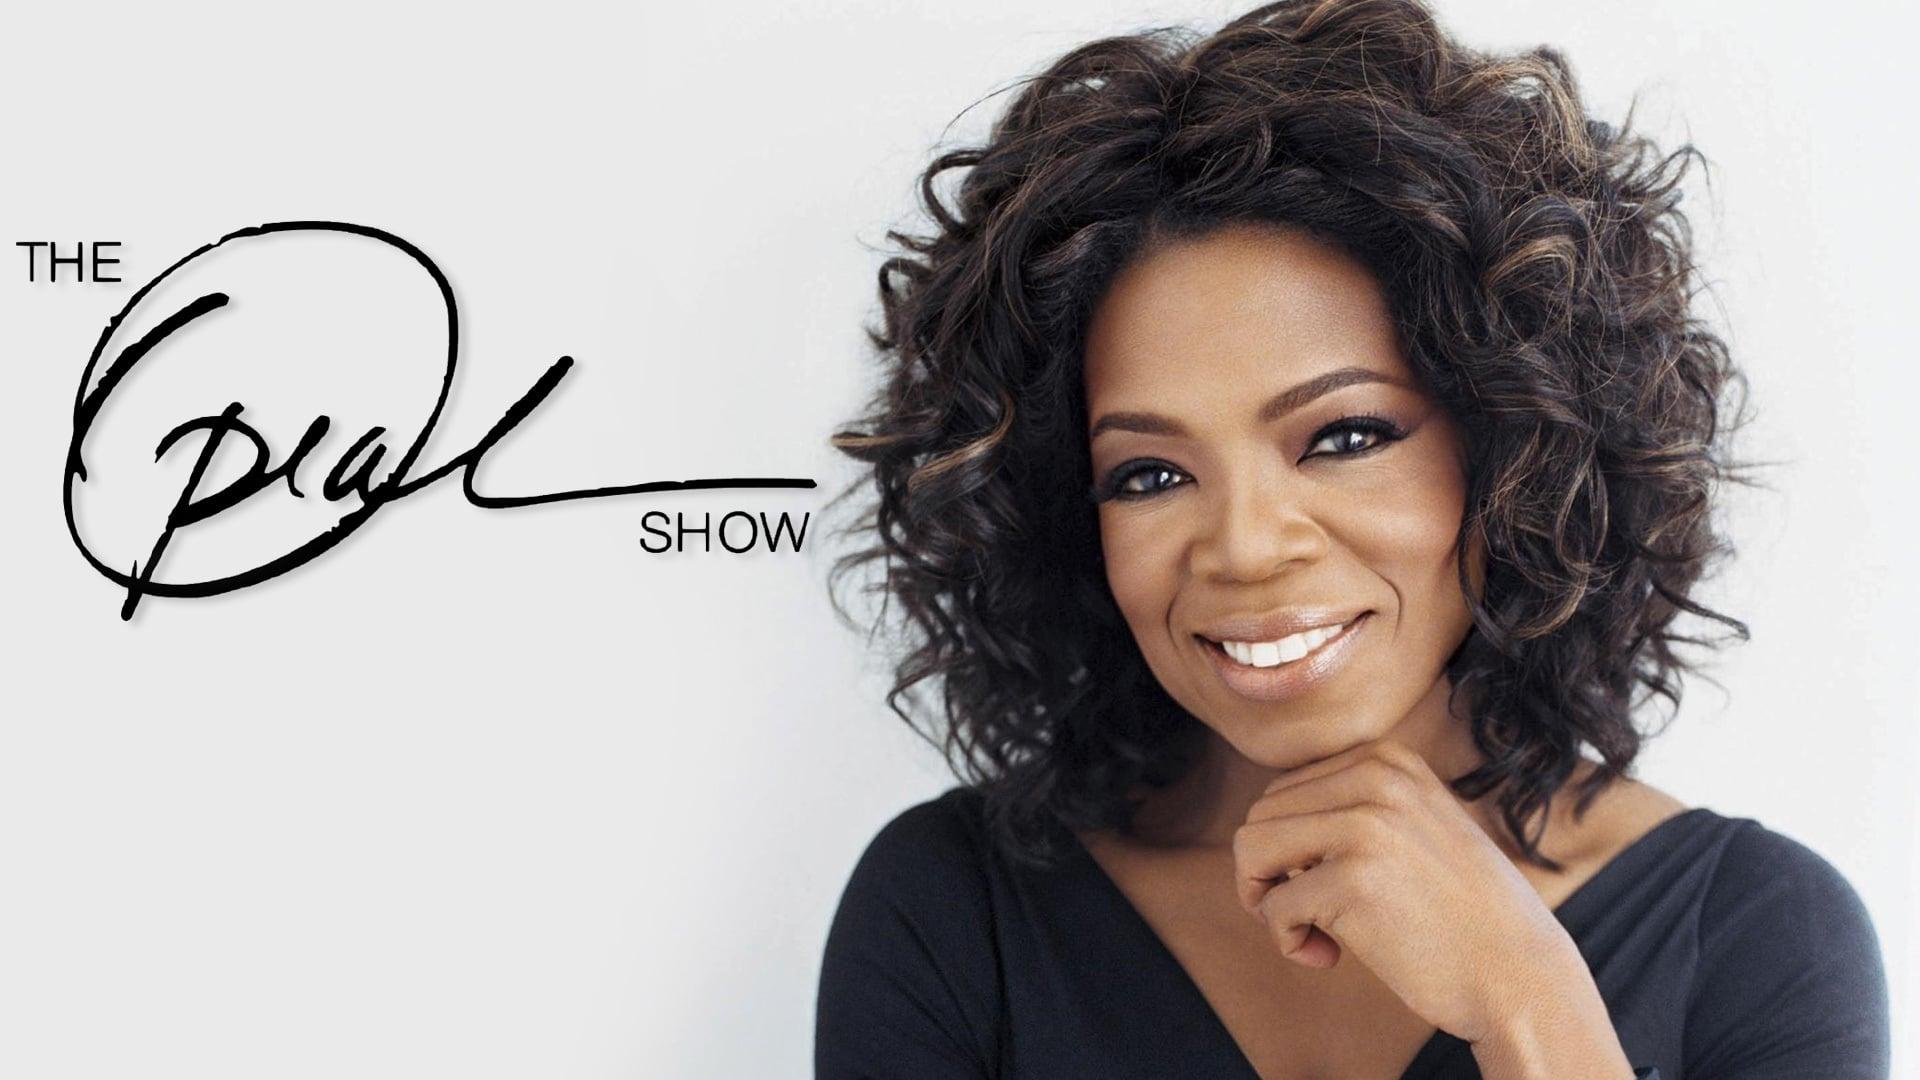 The Oprah Winfrey Show backdrop